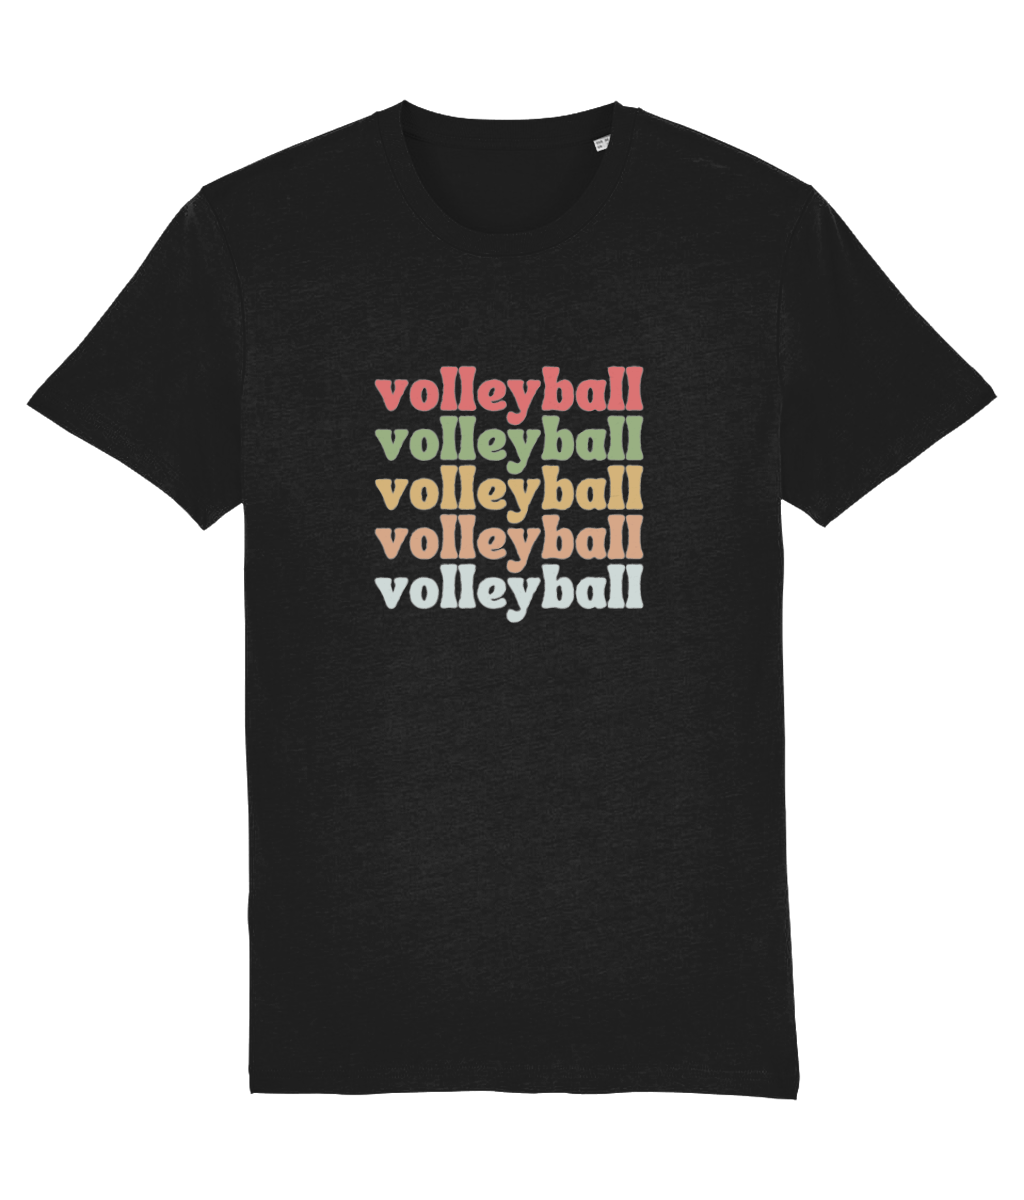 Retro Style Volleyball Shirt 